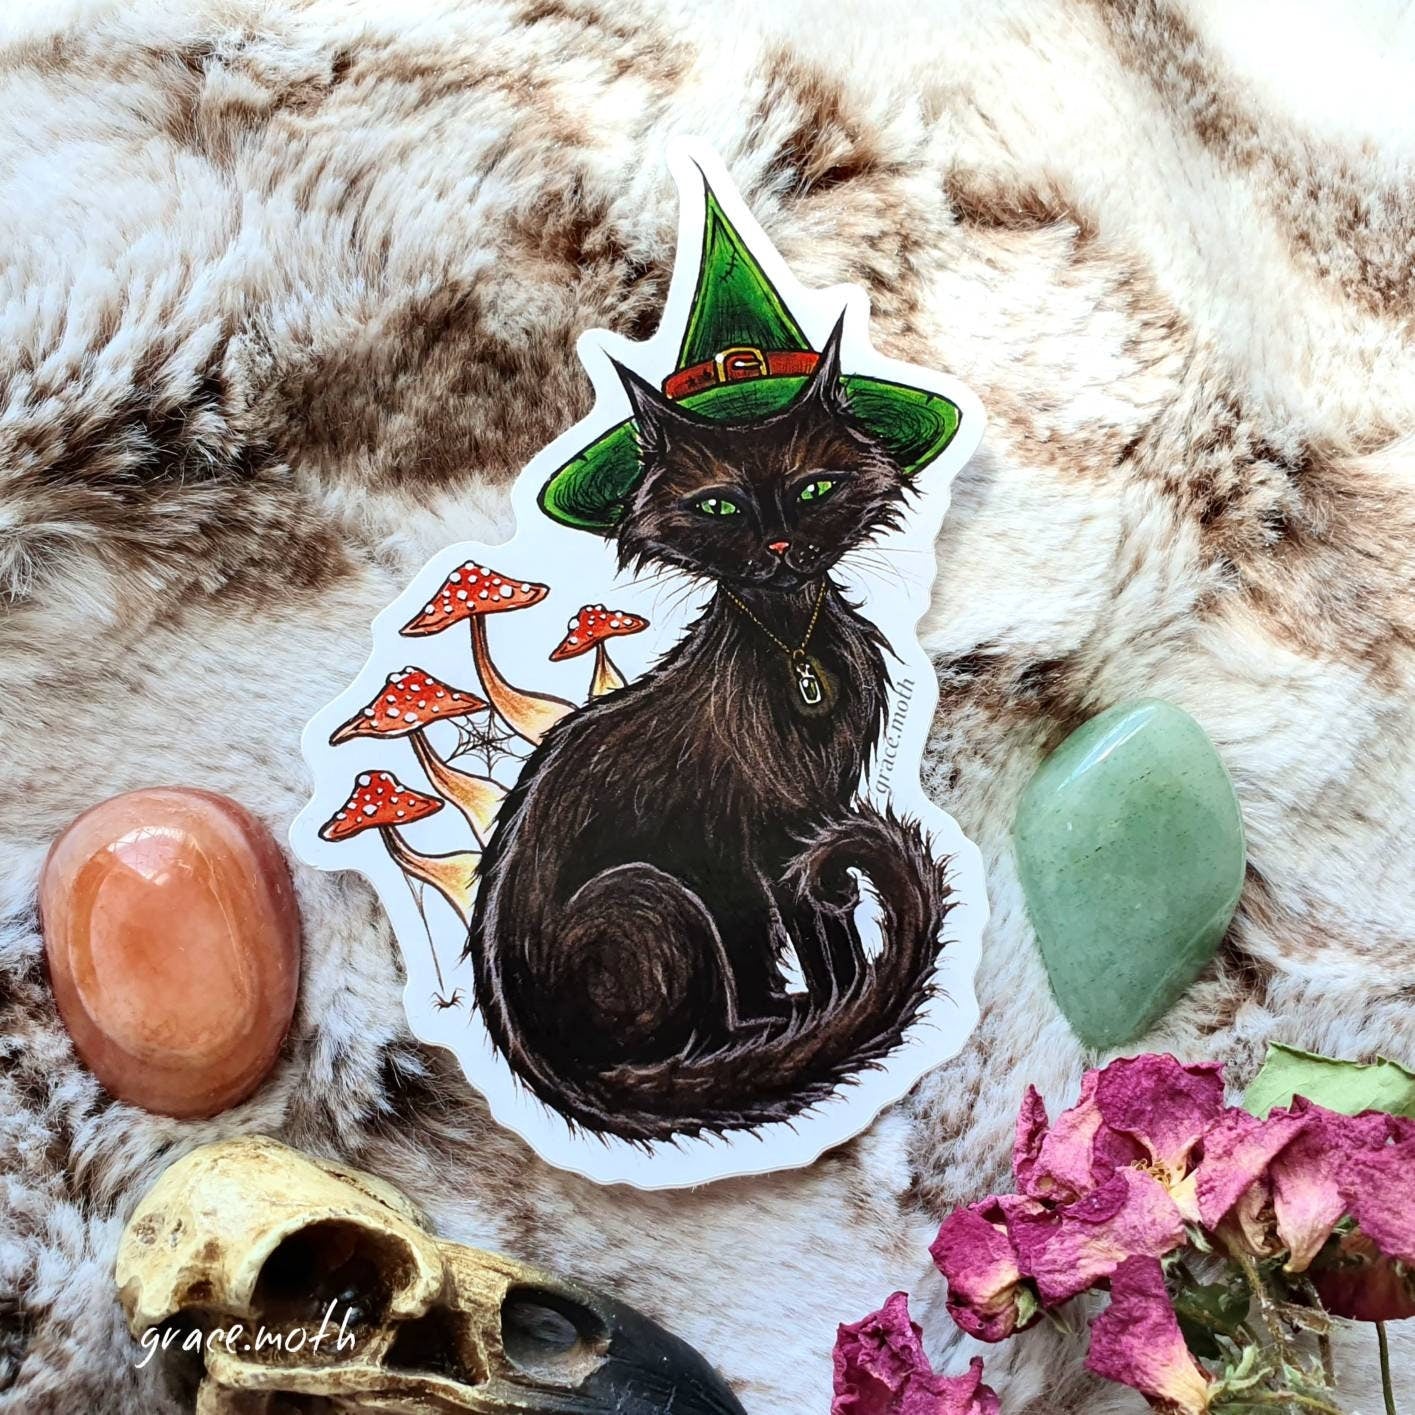 Witches Cat - Vinyl Sticker 10cm by 8cm